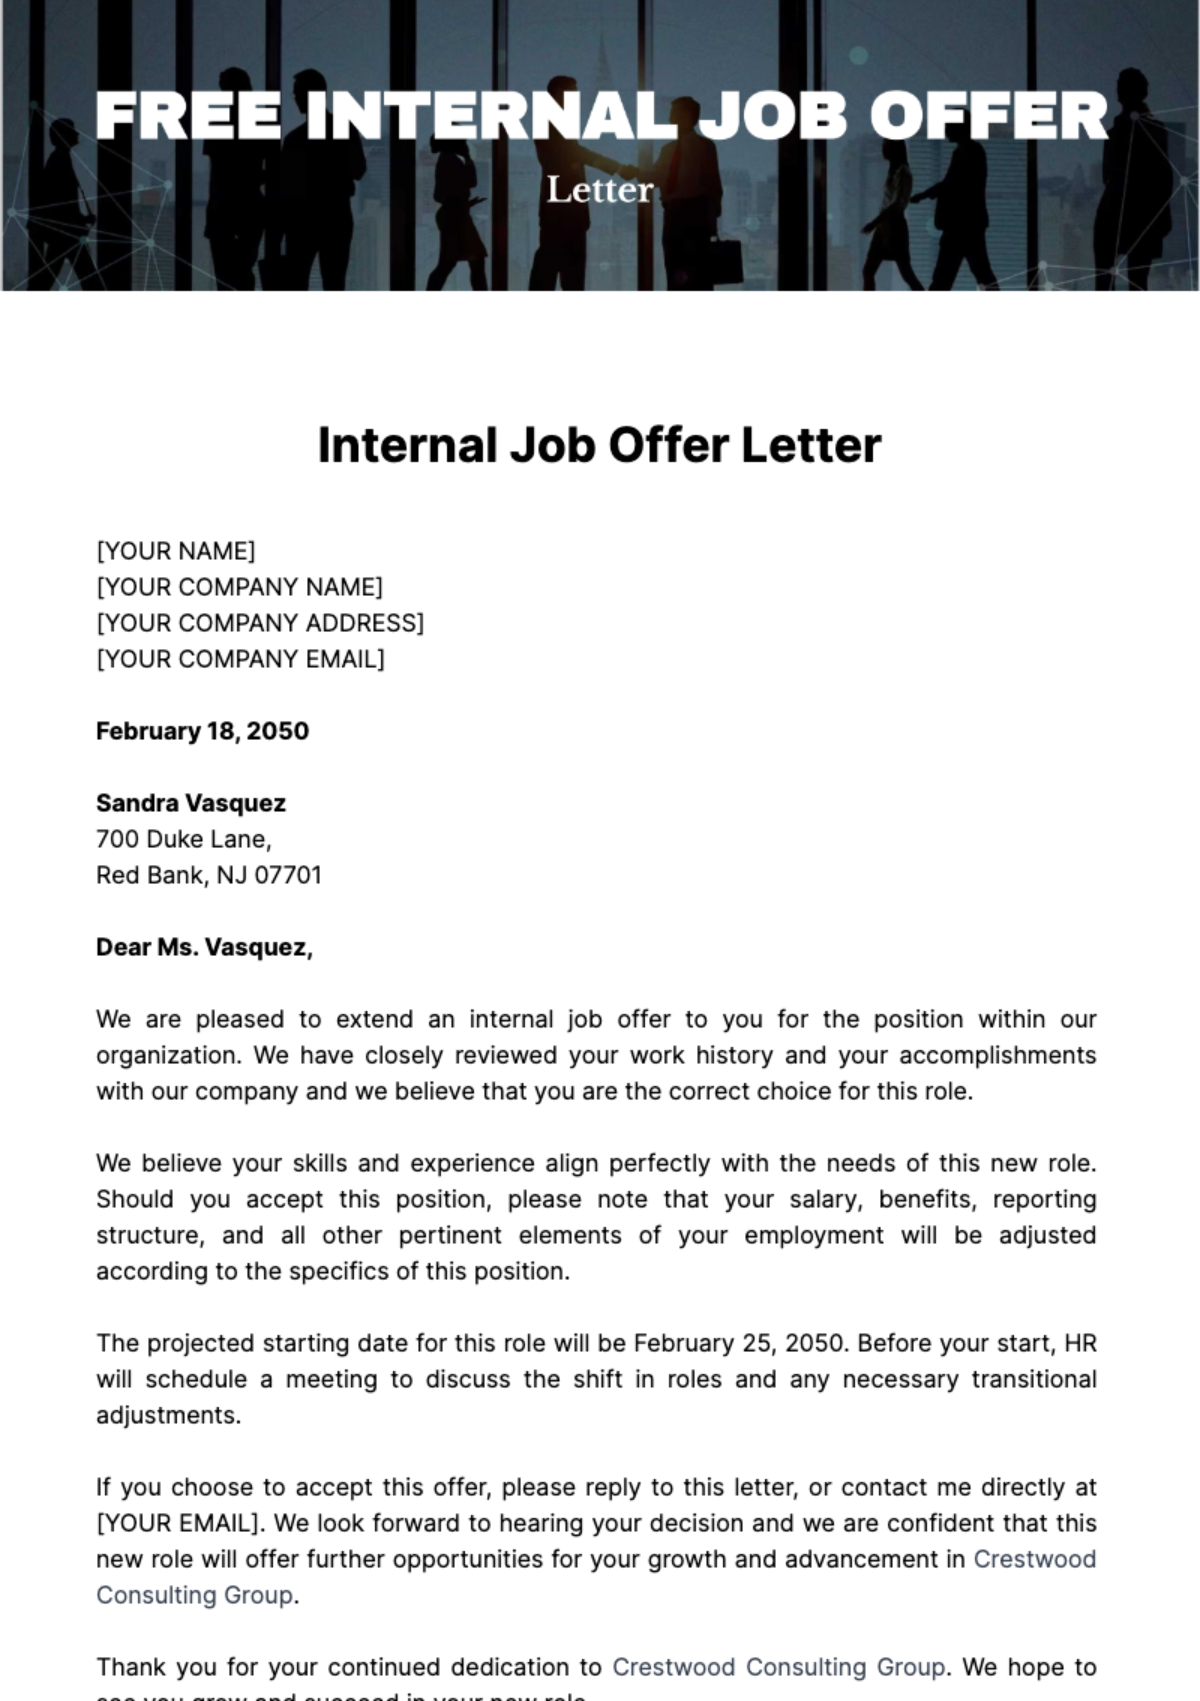 Free Internal Job Offer Letter Template